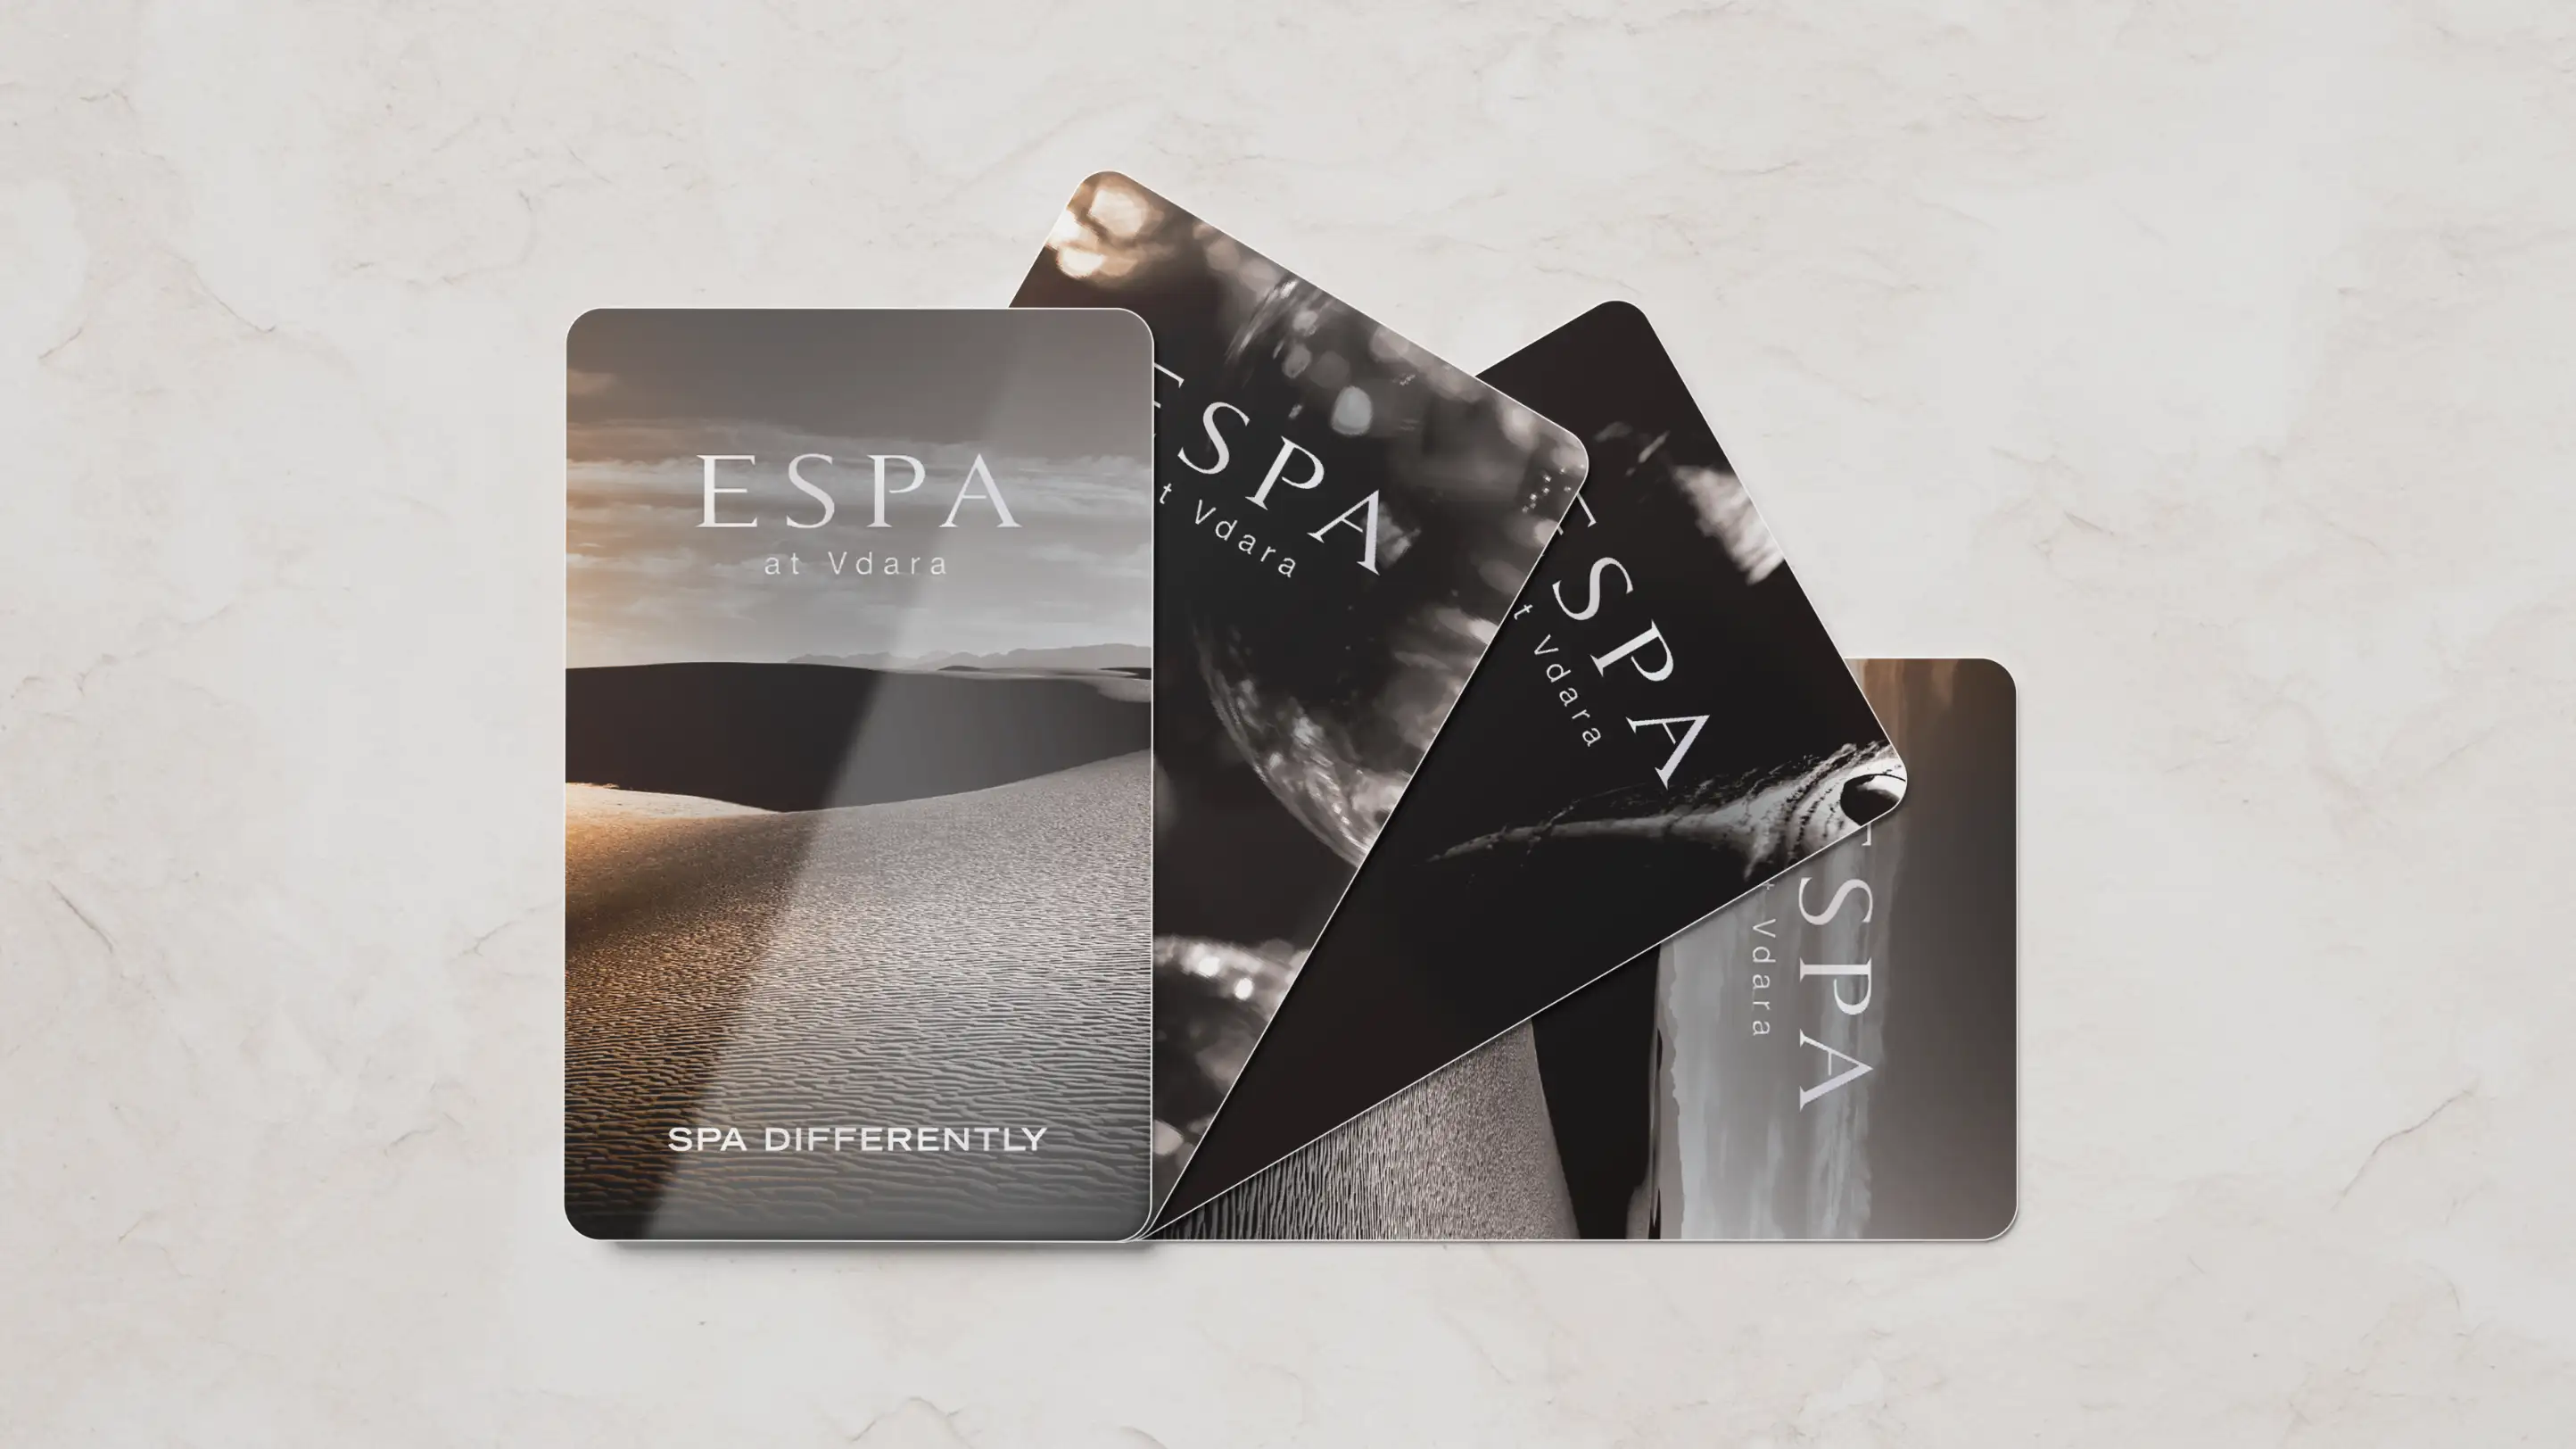 Espa at Vdara co-branded hotel keycard design.